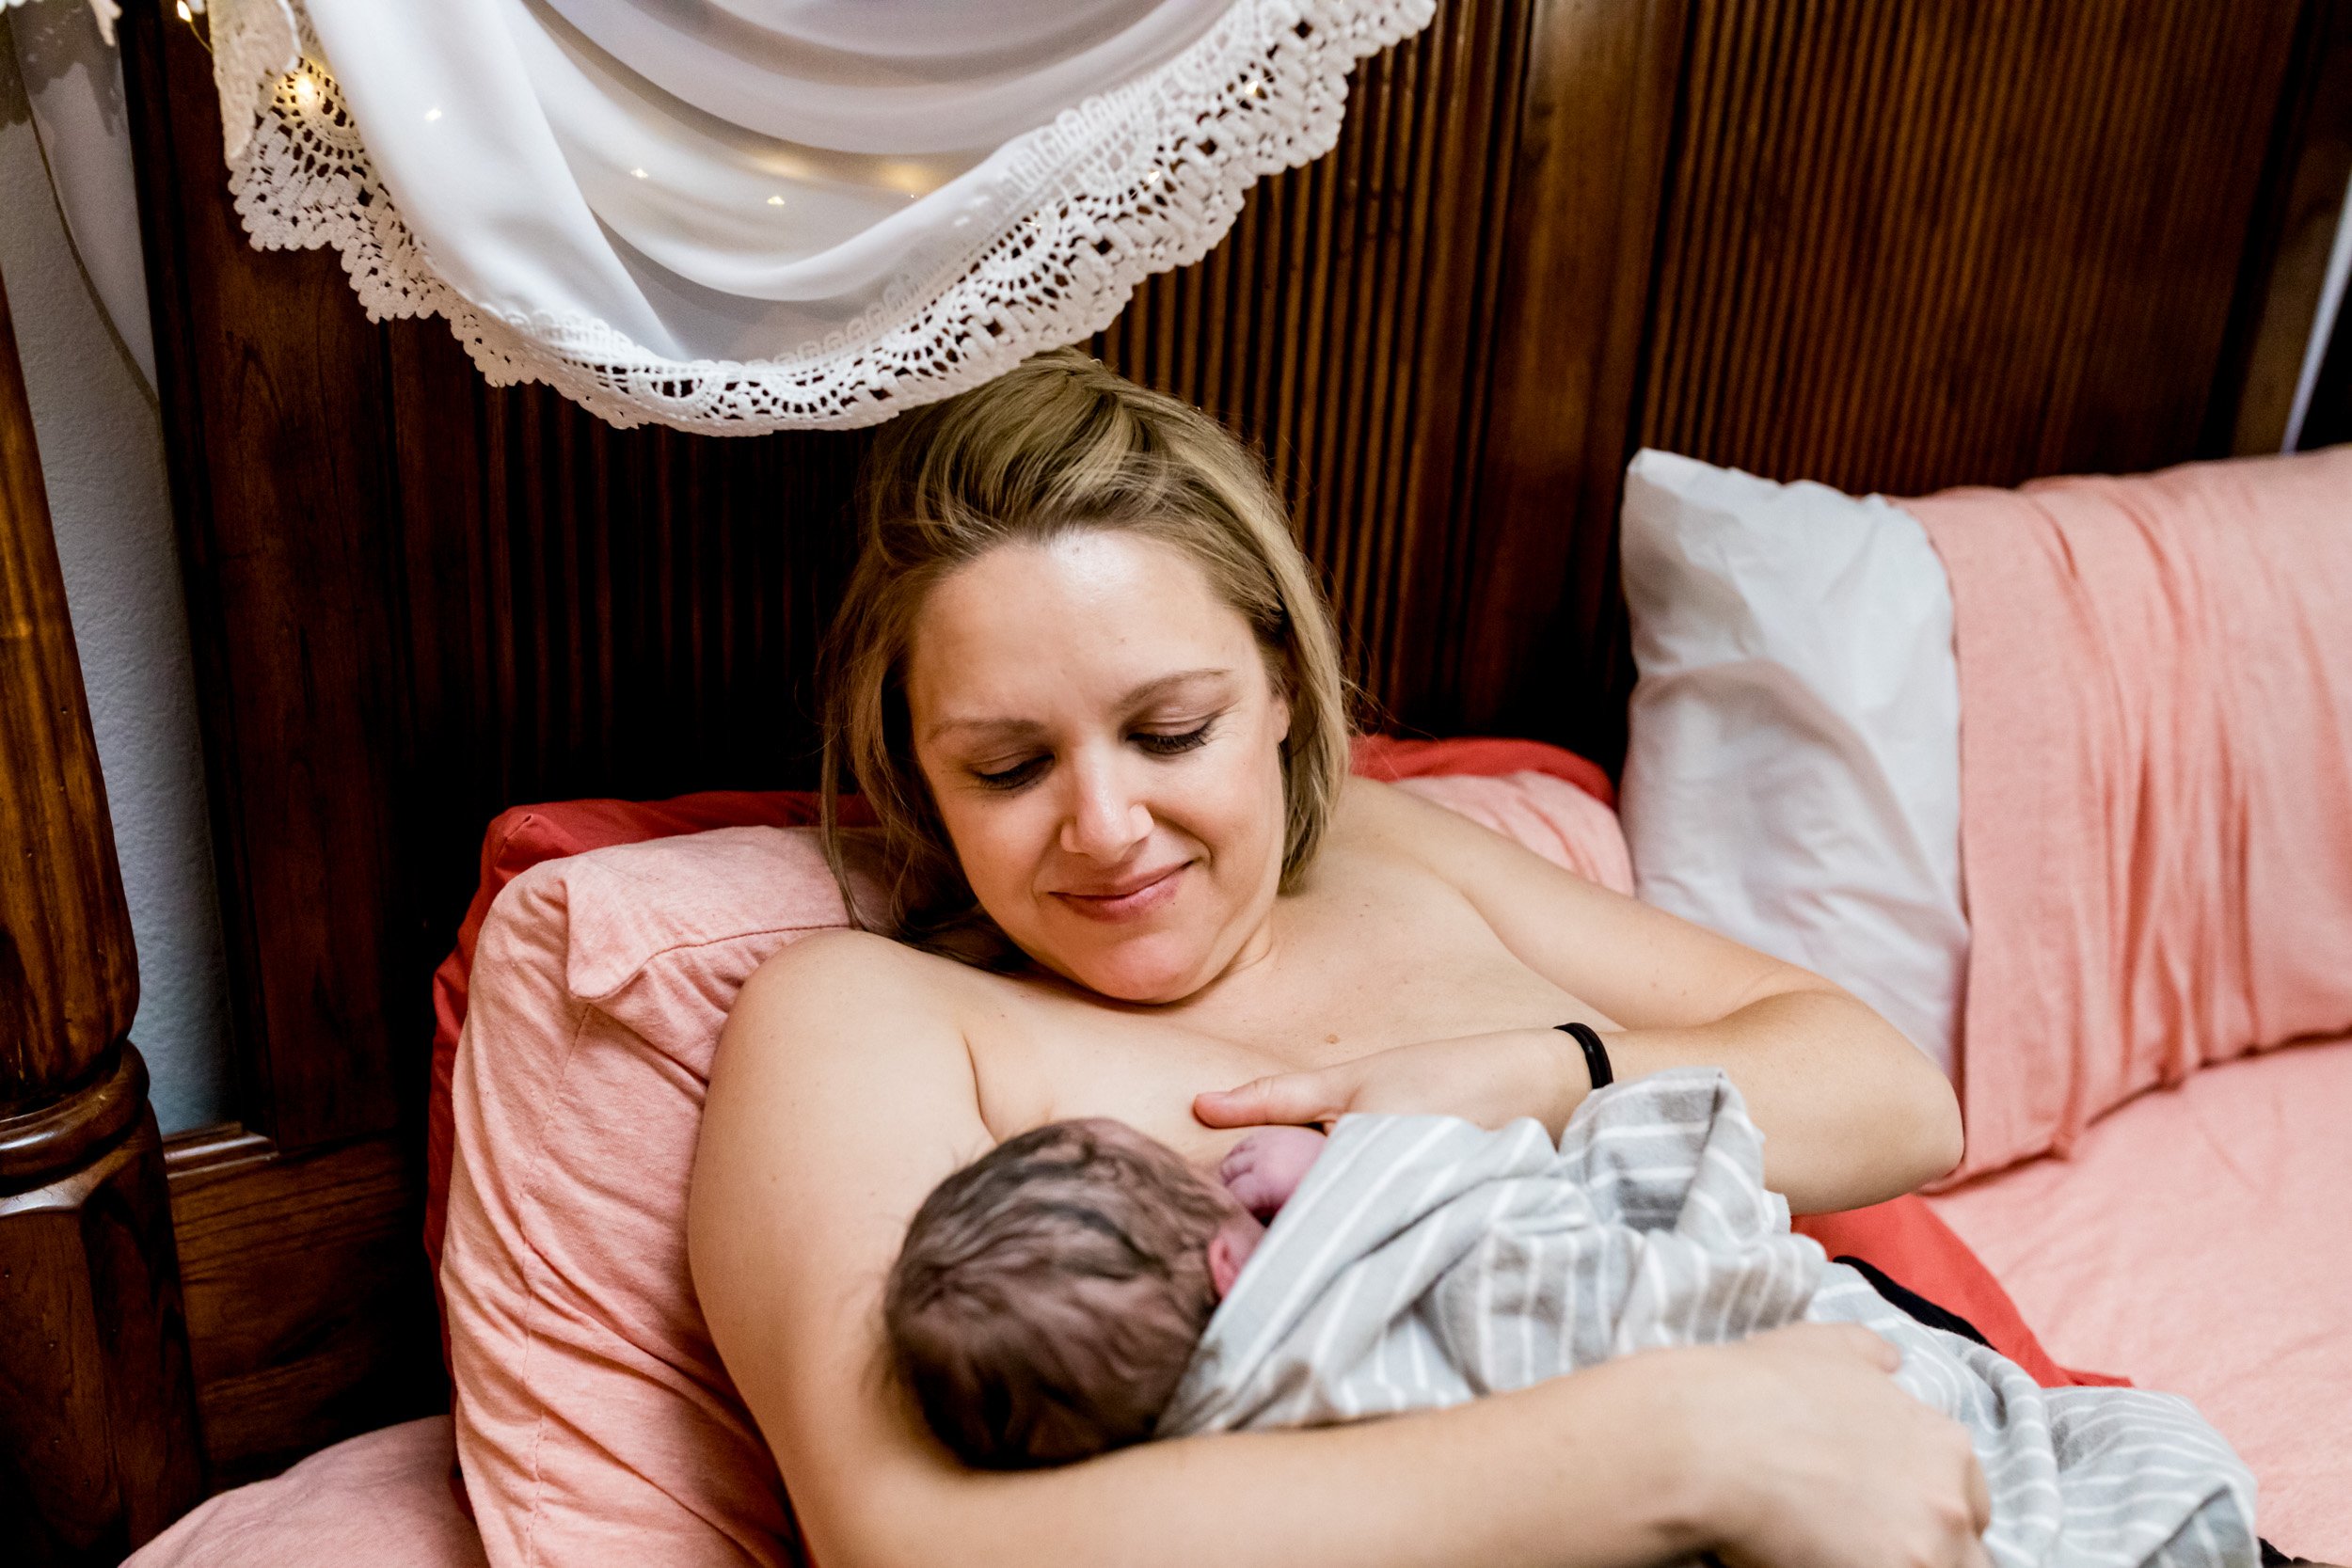 birth mom smiling sweetly as she nurses her baby girl